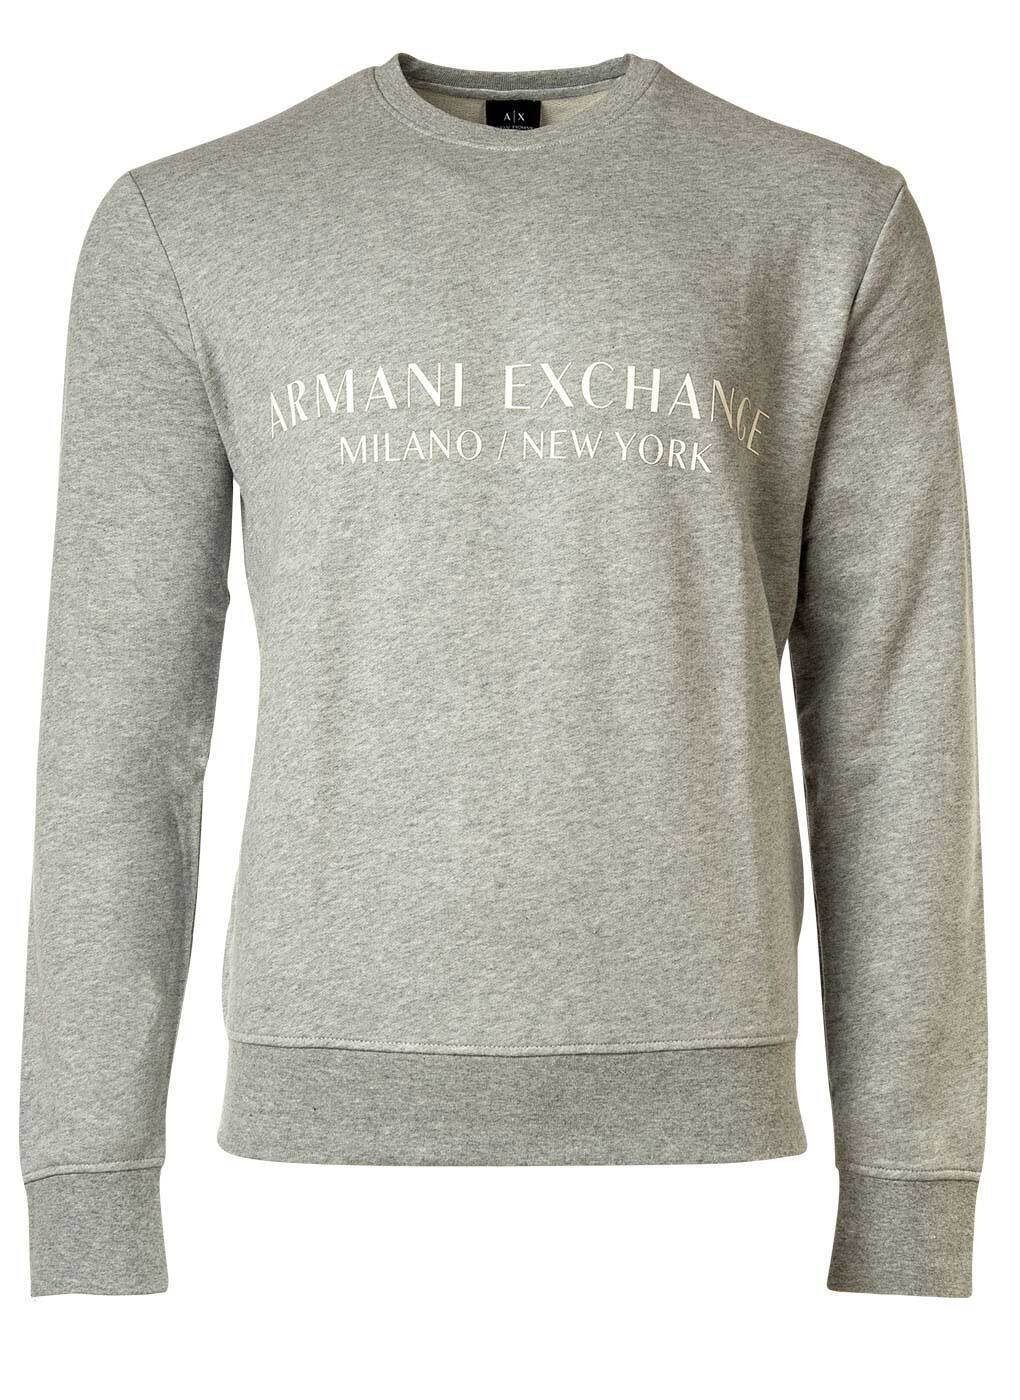 ARMANI EXCHANGE Sweatshirt Herren Sweatshirt - Pullover, Logo Grau